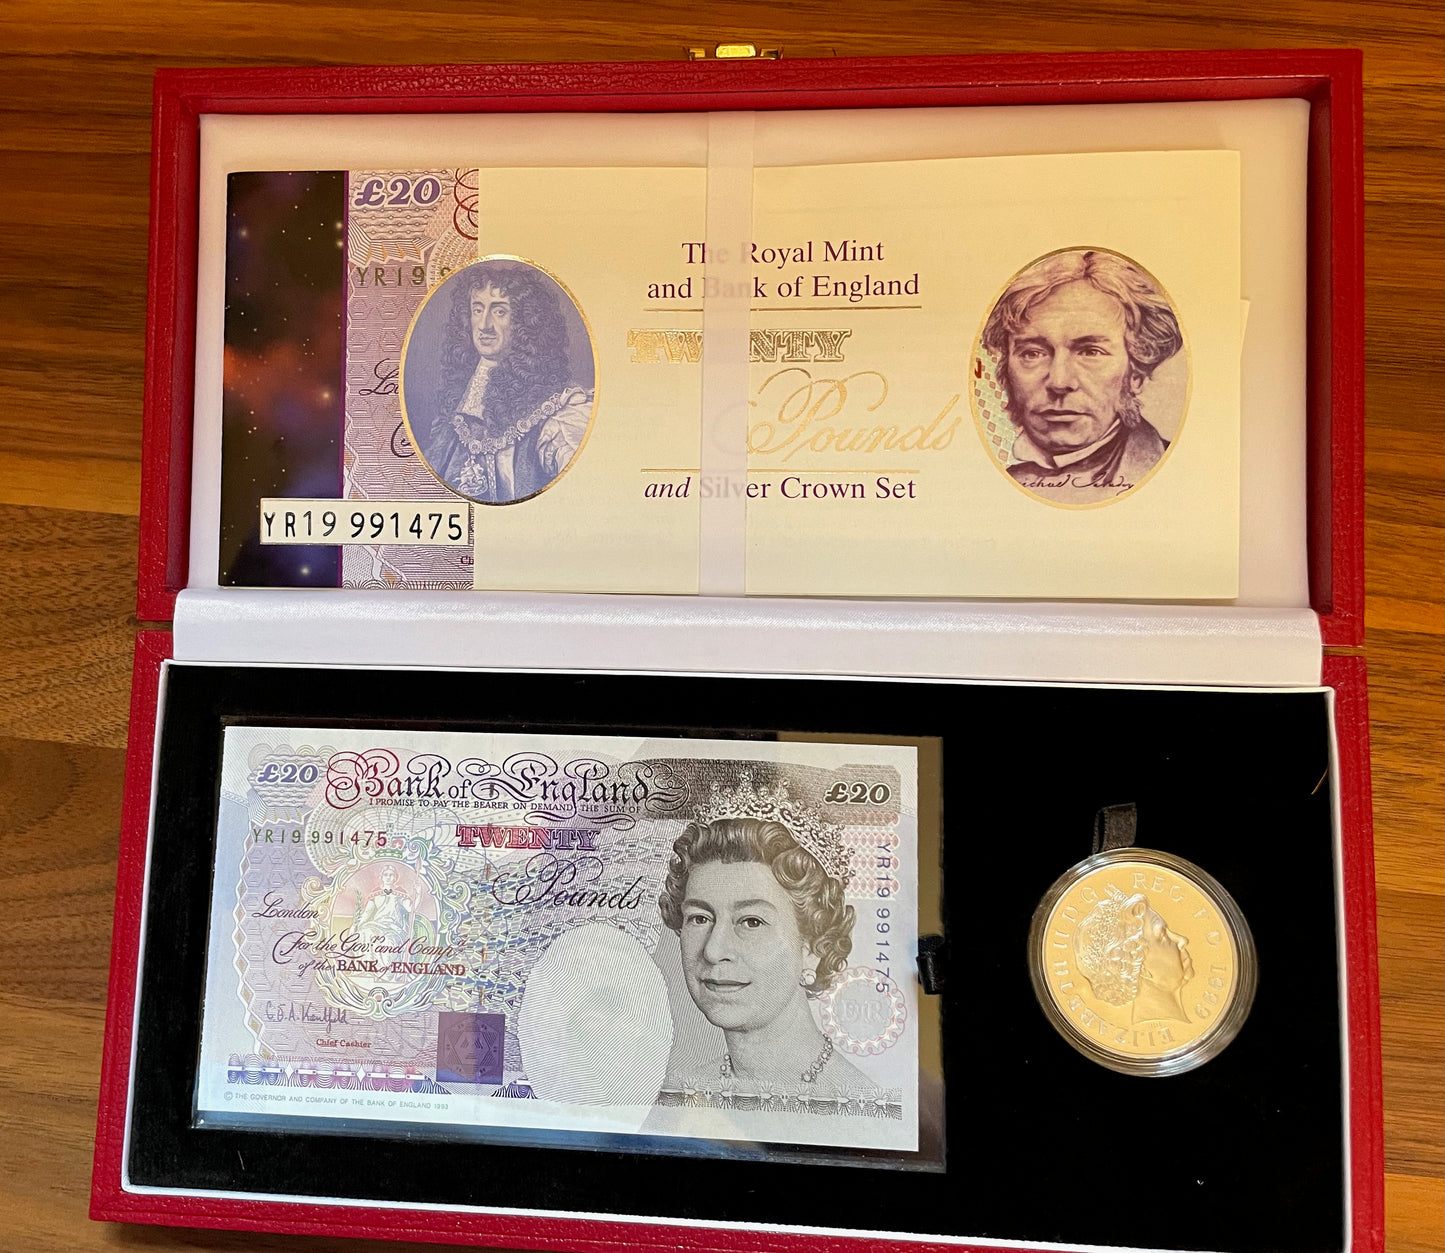 C140 1999 Debden presentation set Year prefix £20 B375 (YR19) with £5 silver proof Millennium crown